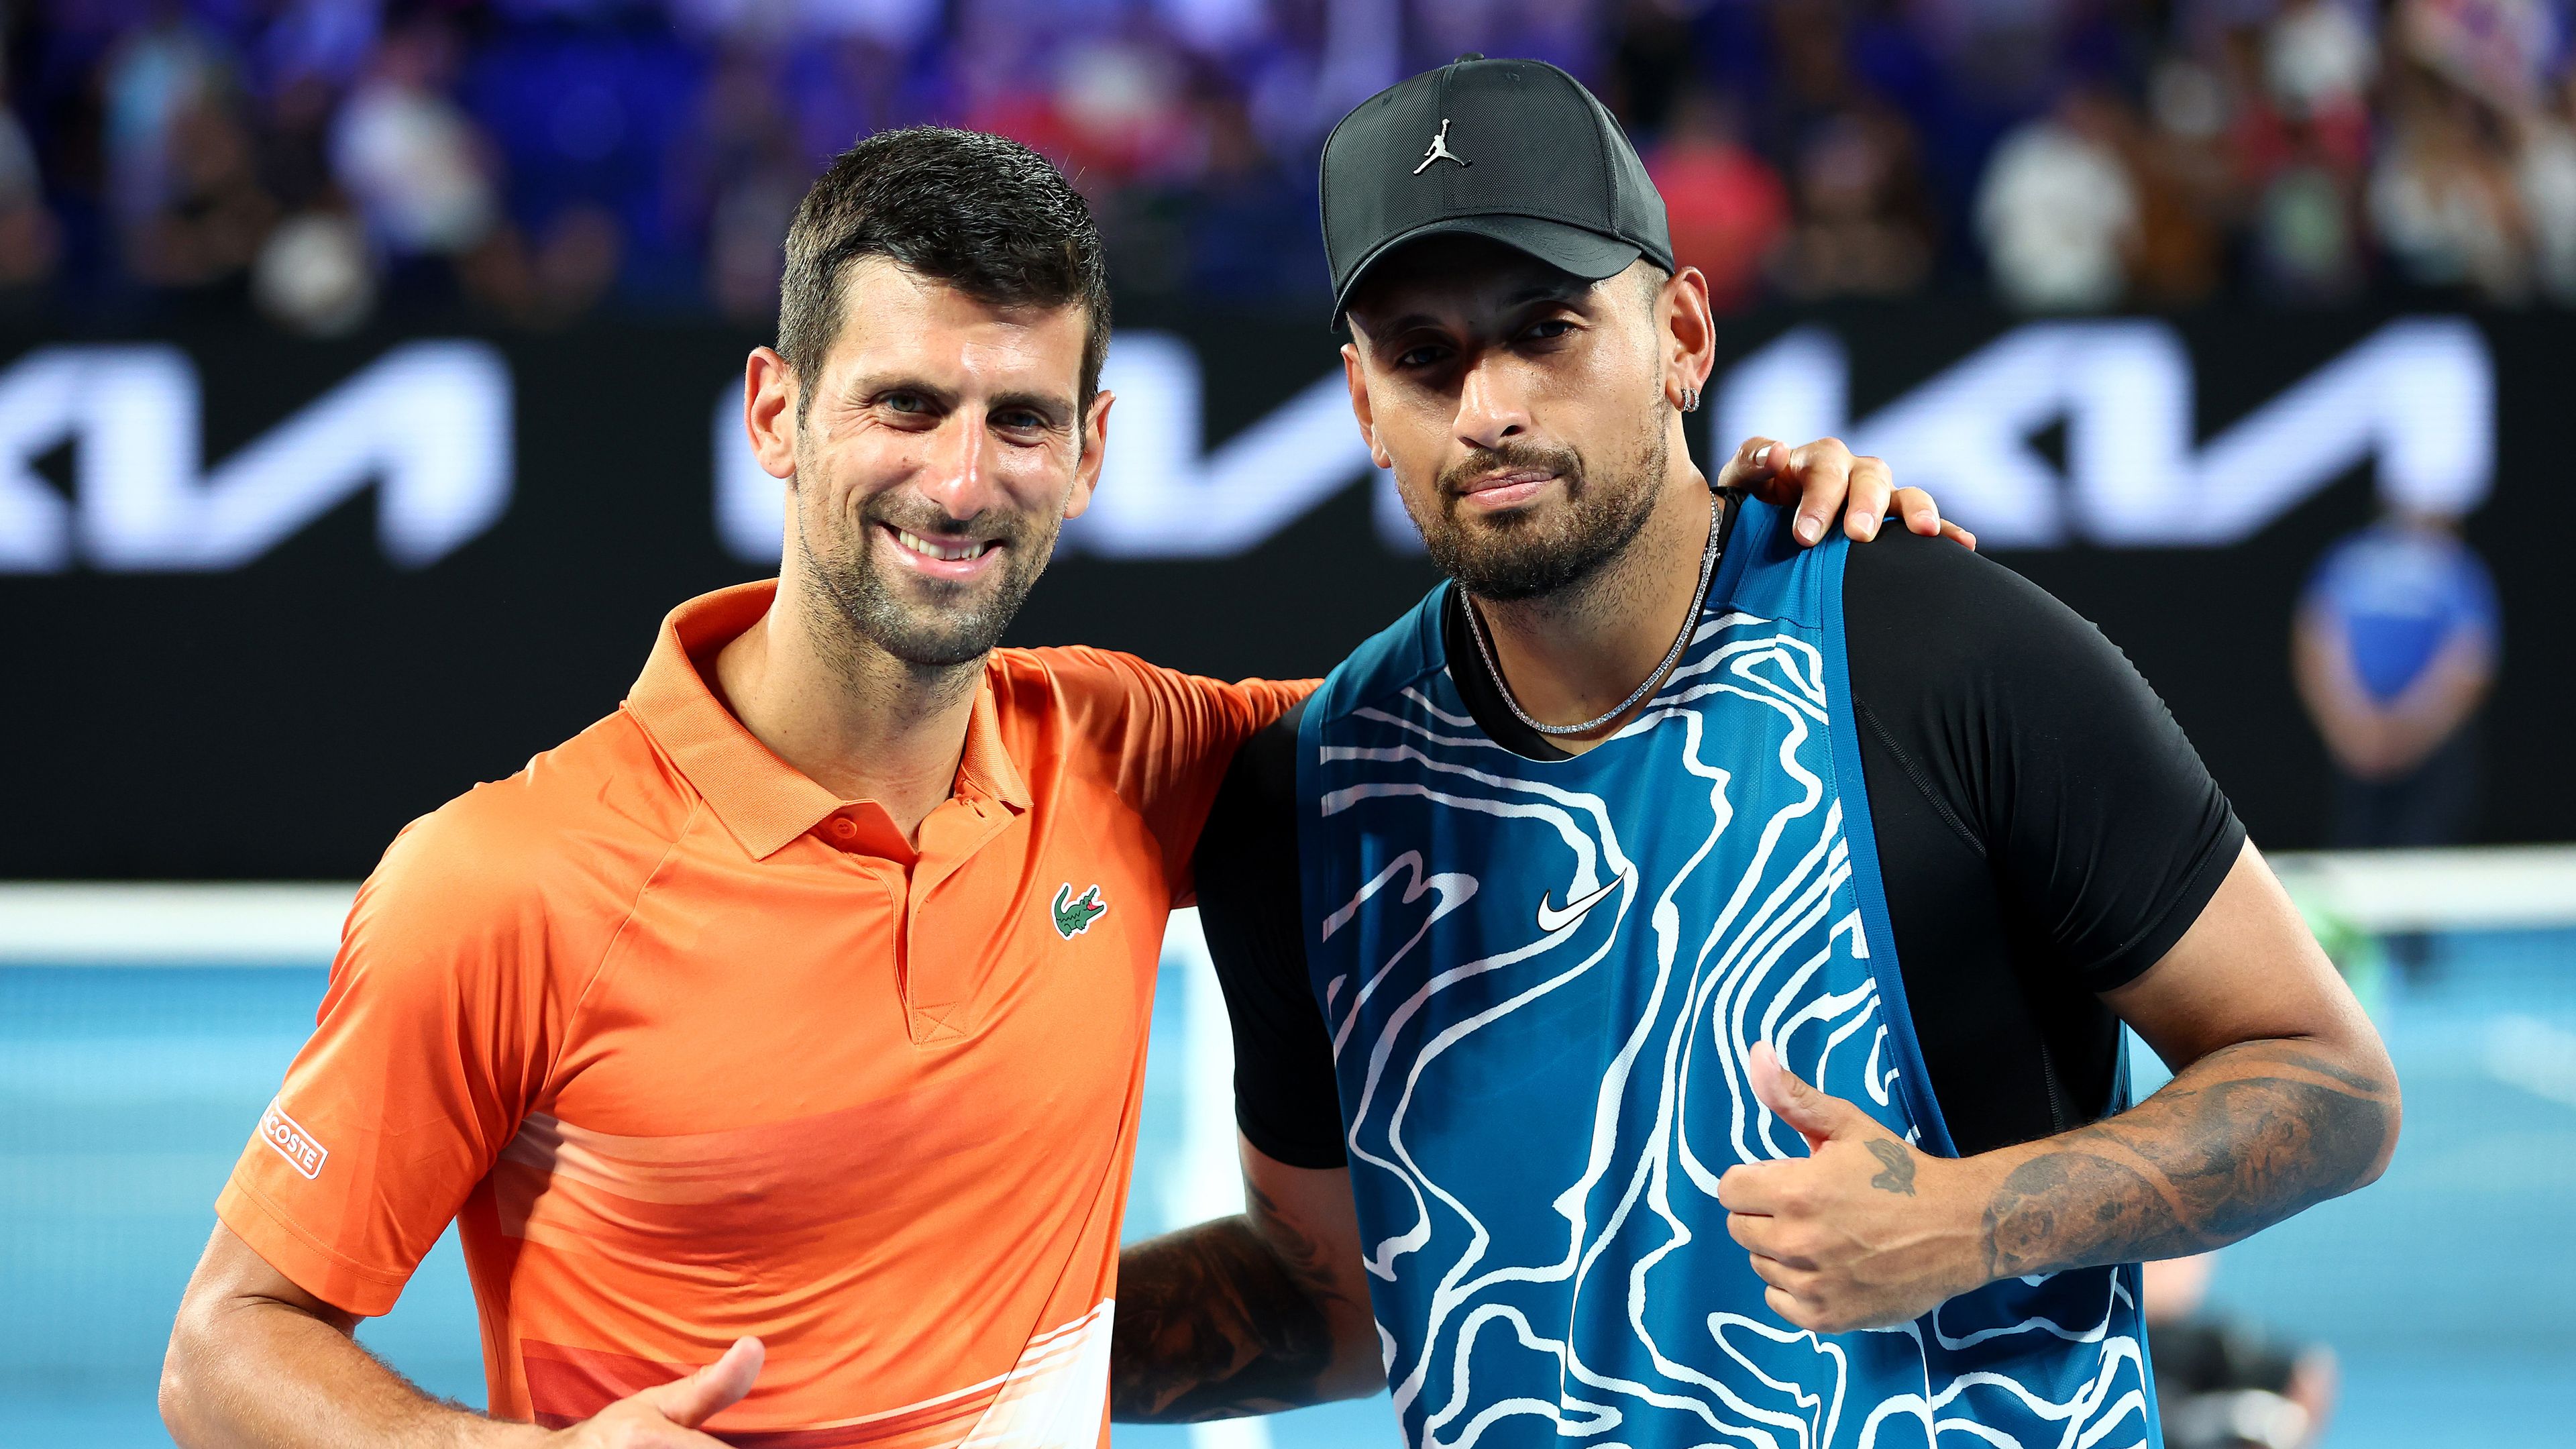 Novak Djokovic and Nick Kyrgios pose for a photo following their Arena Showdown charity match.